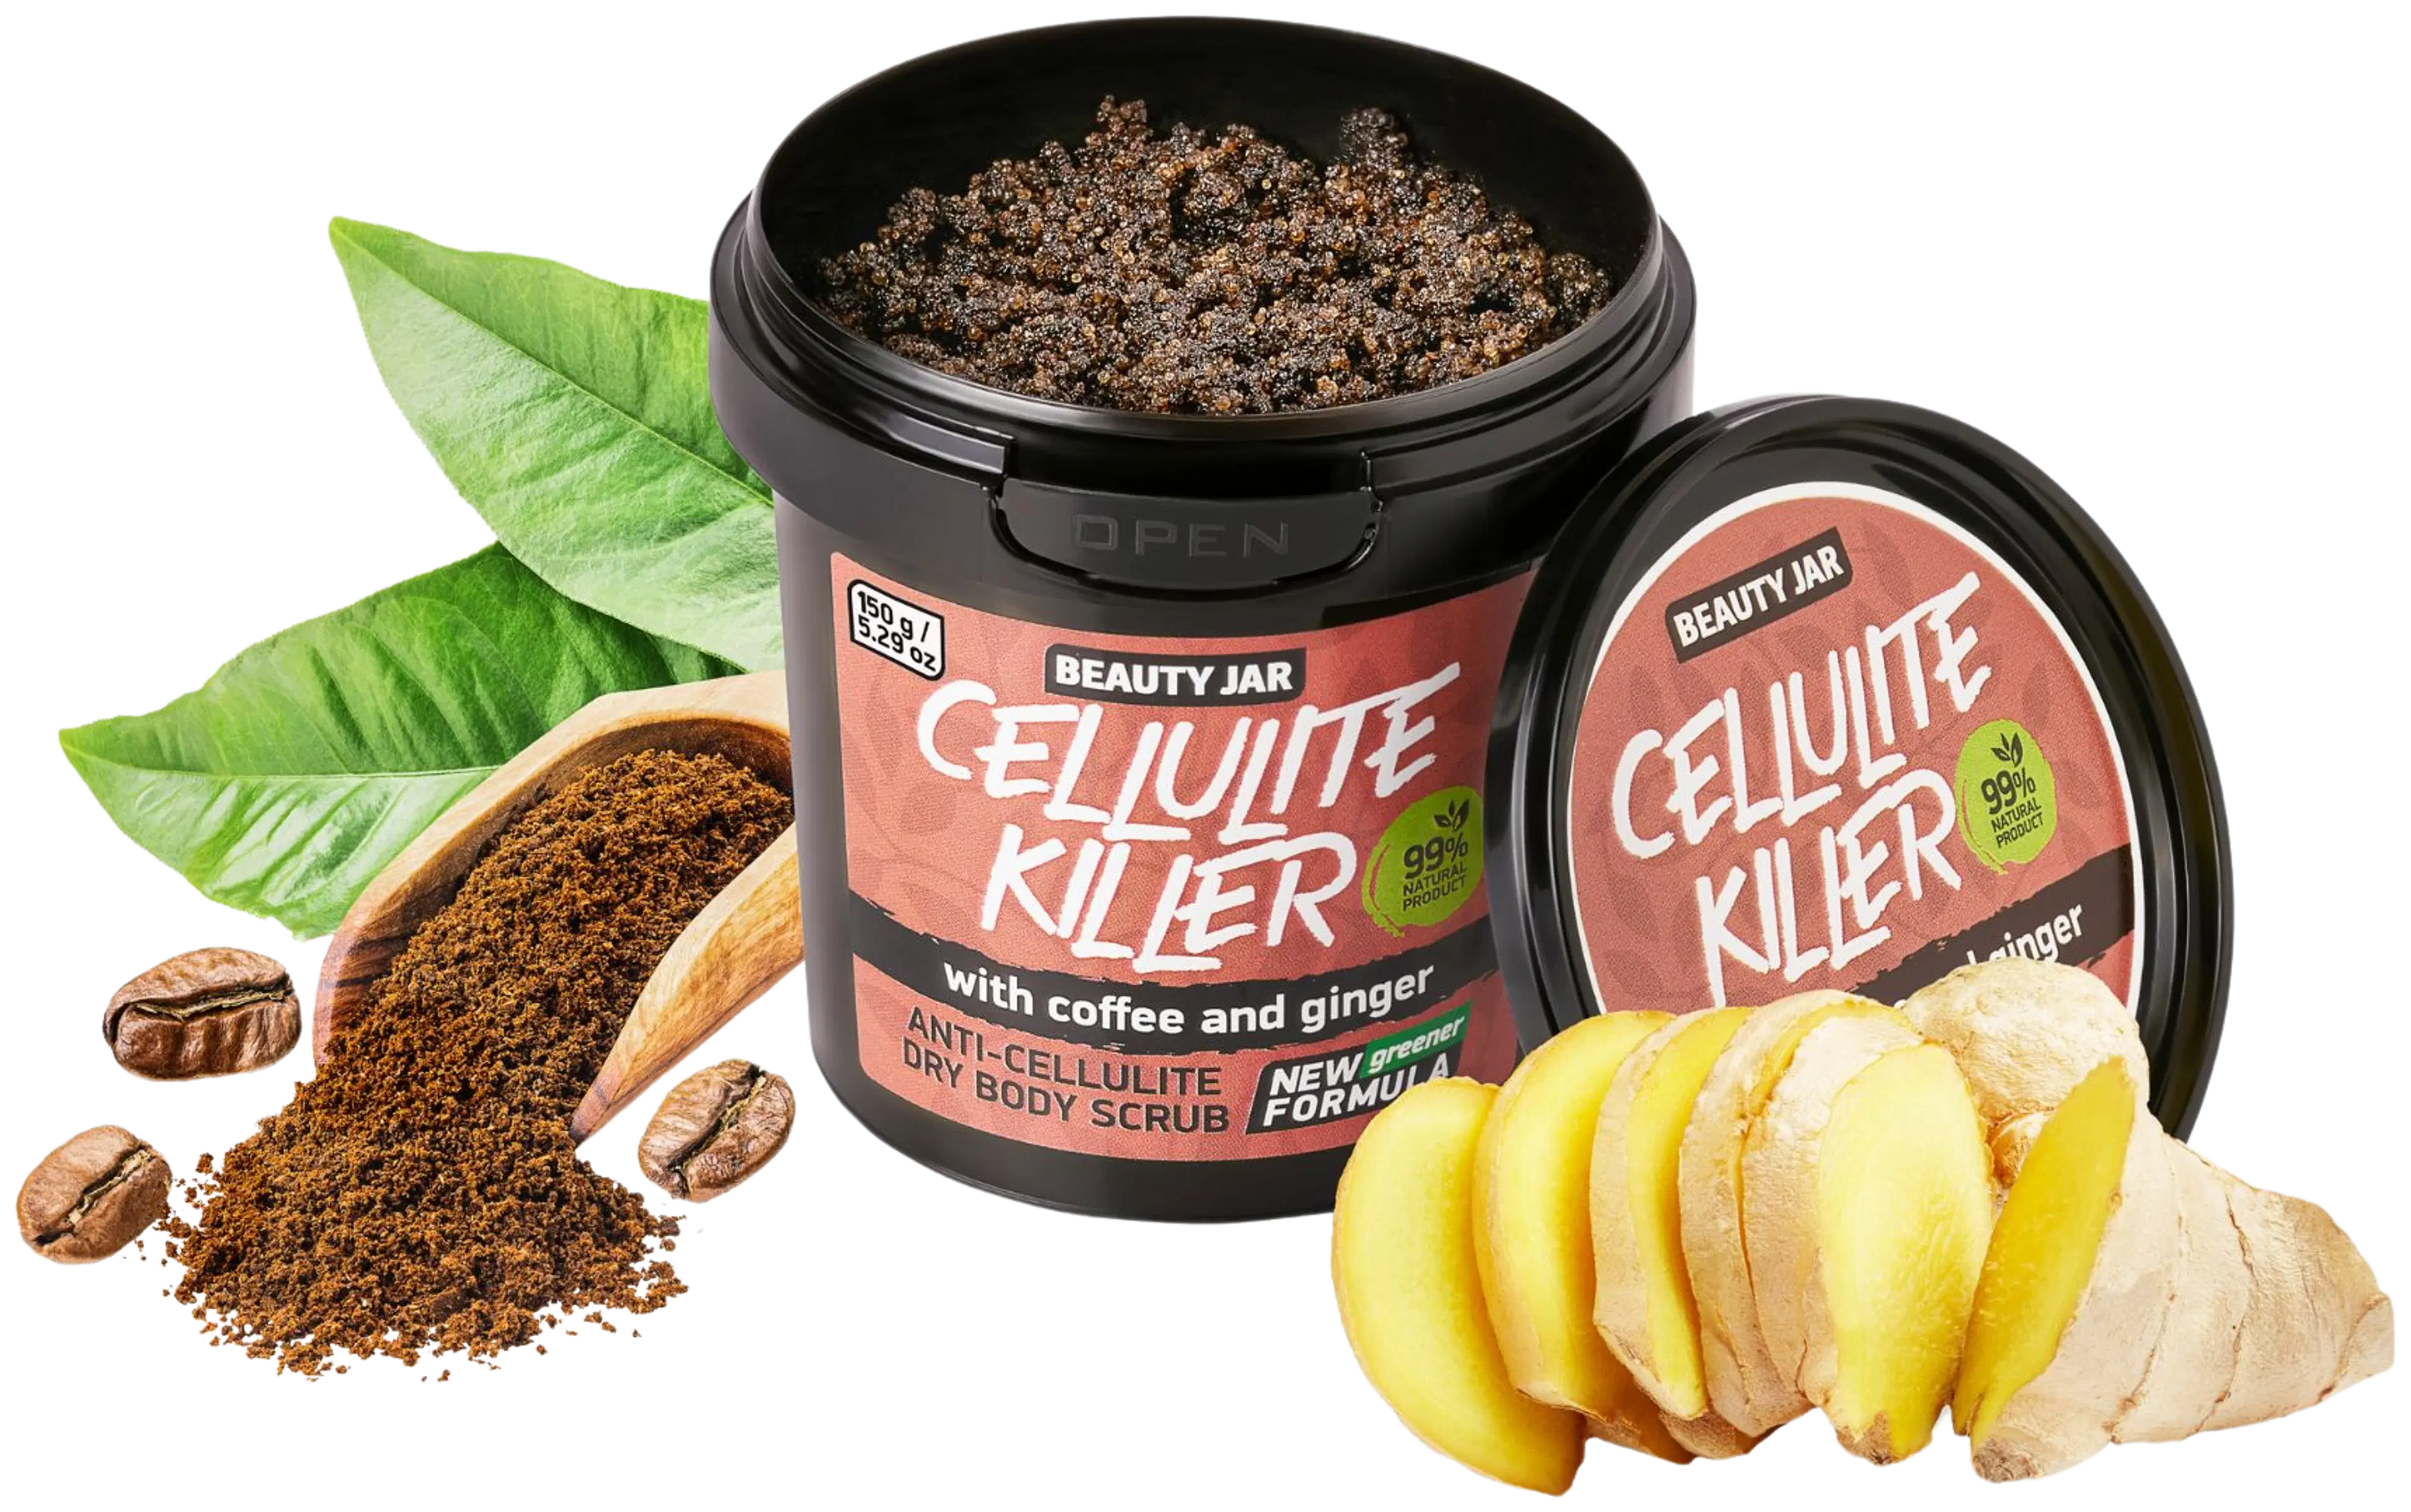 Beauty Jar Cellulite Killer Dry Body Scrub vartalokuorinta 150 g